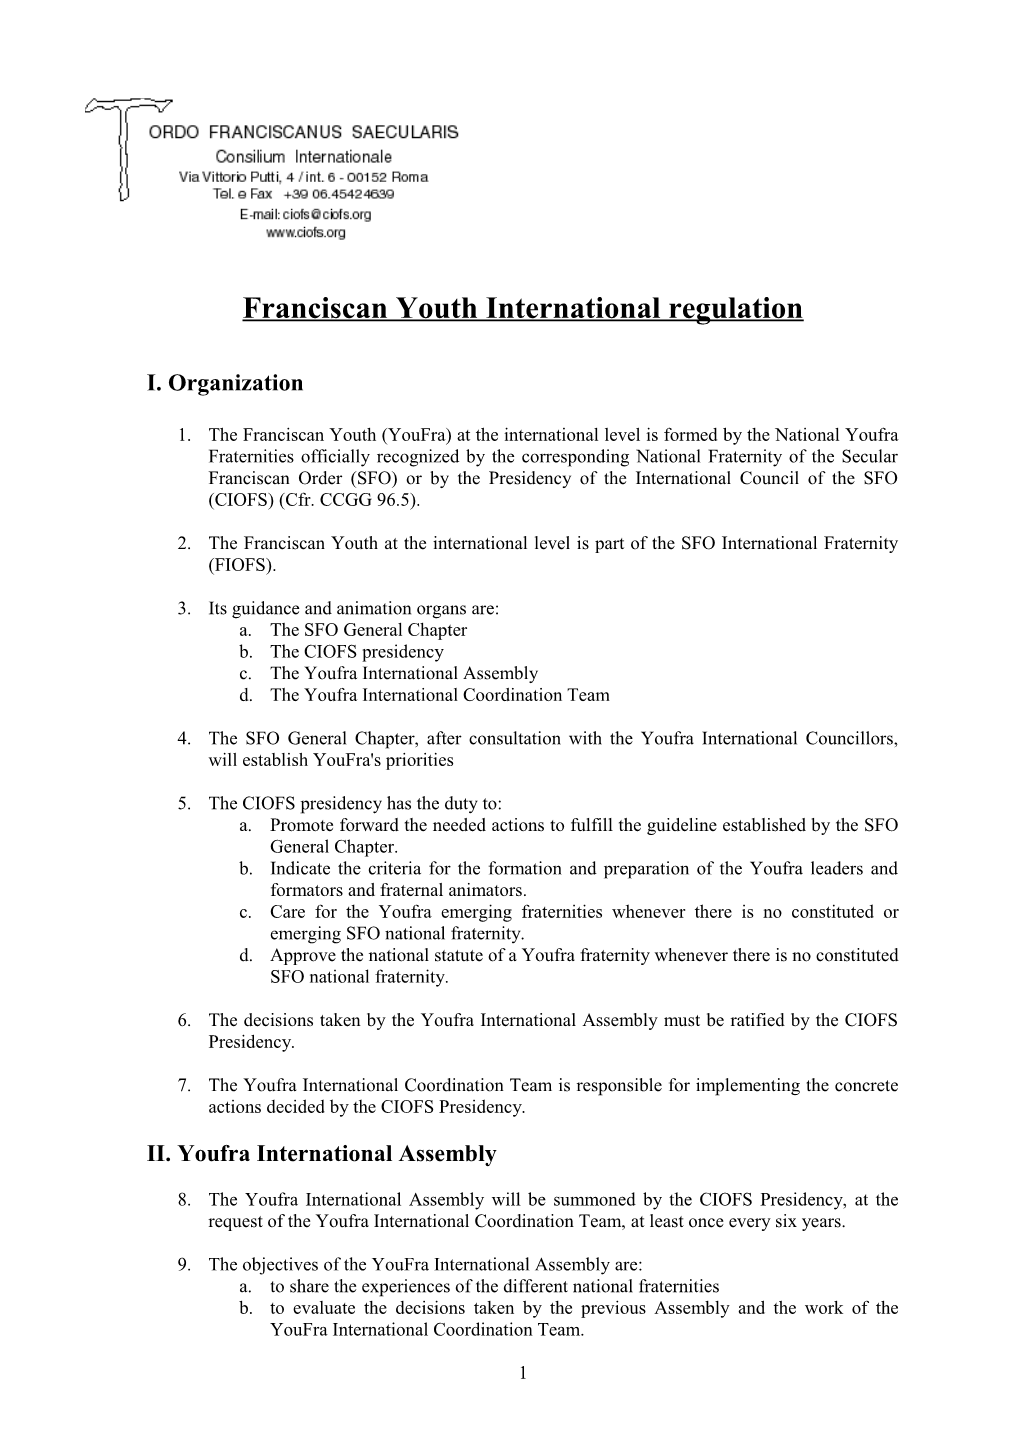 Franciscan Youth International Regulation